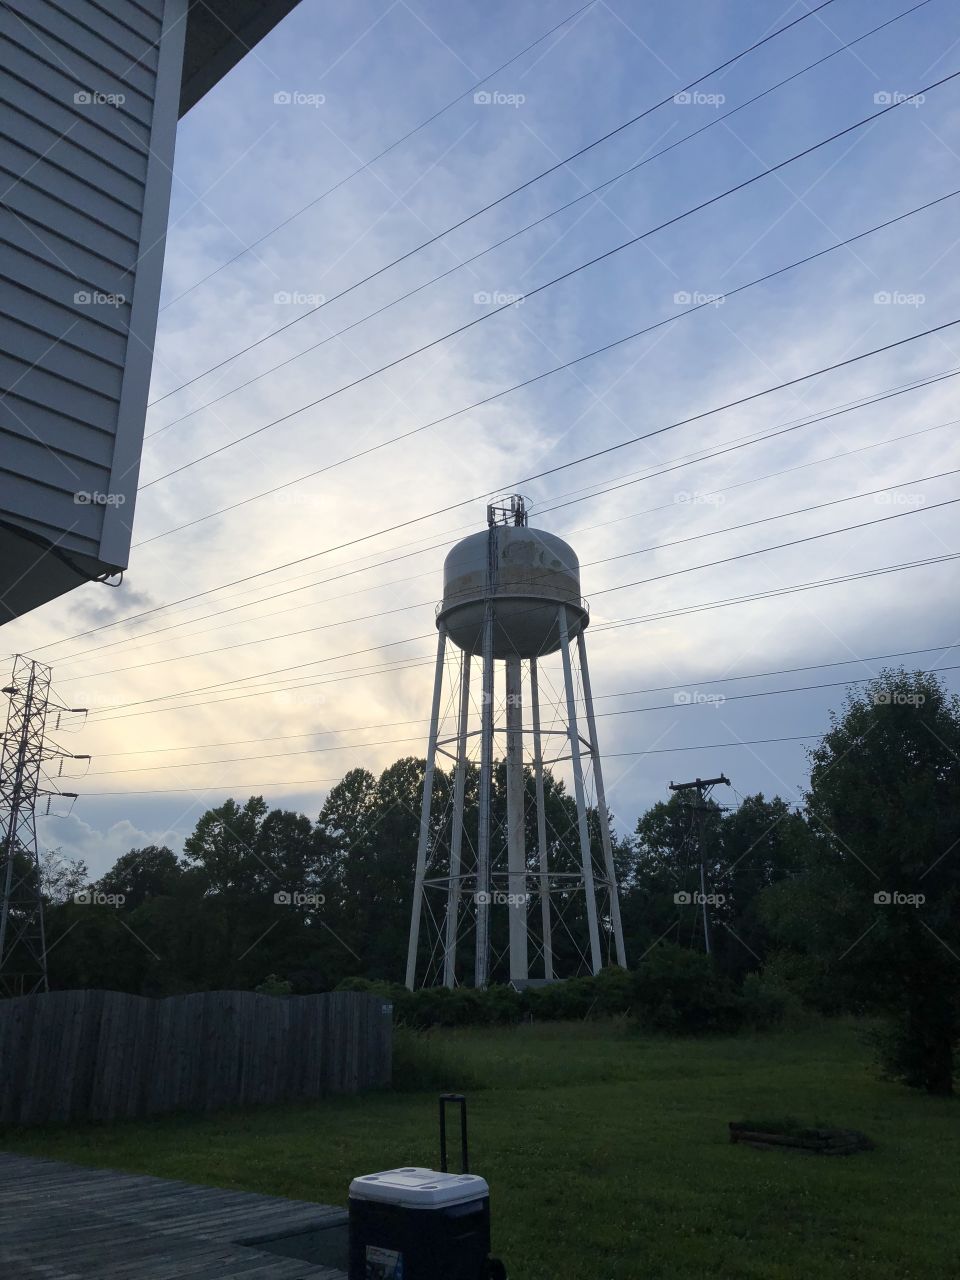 Water tower sky 